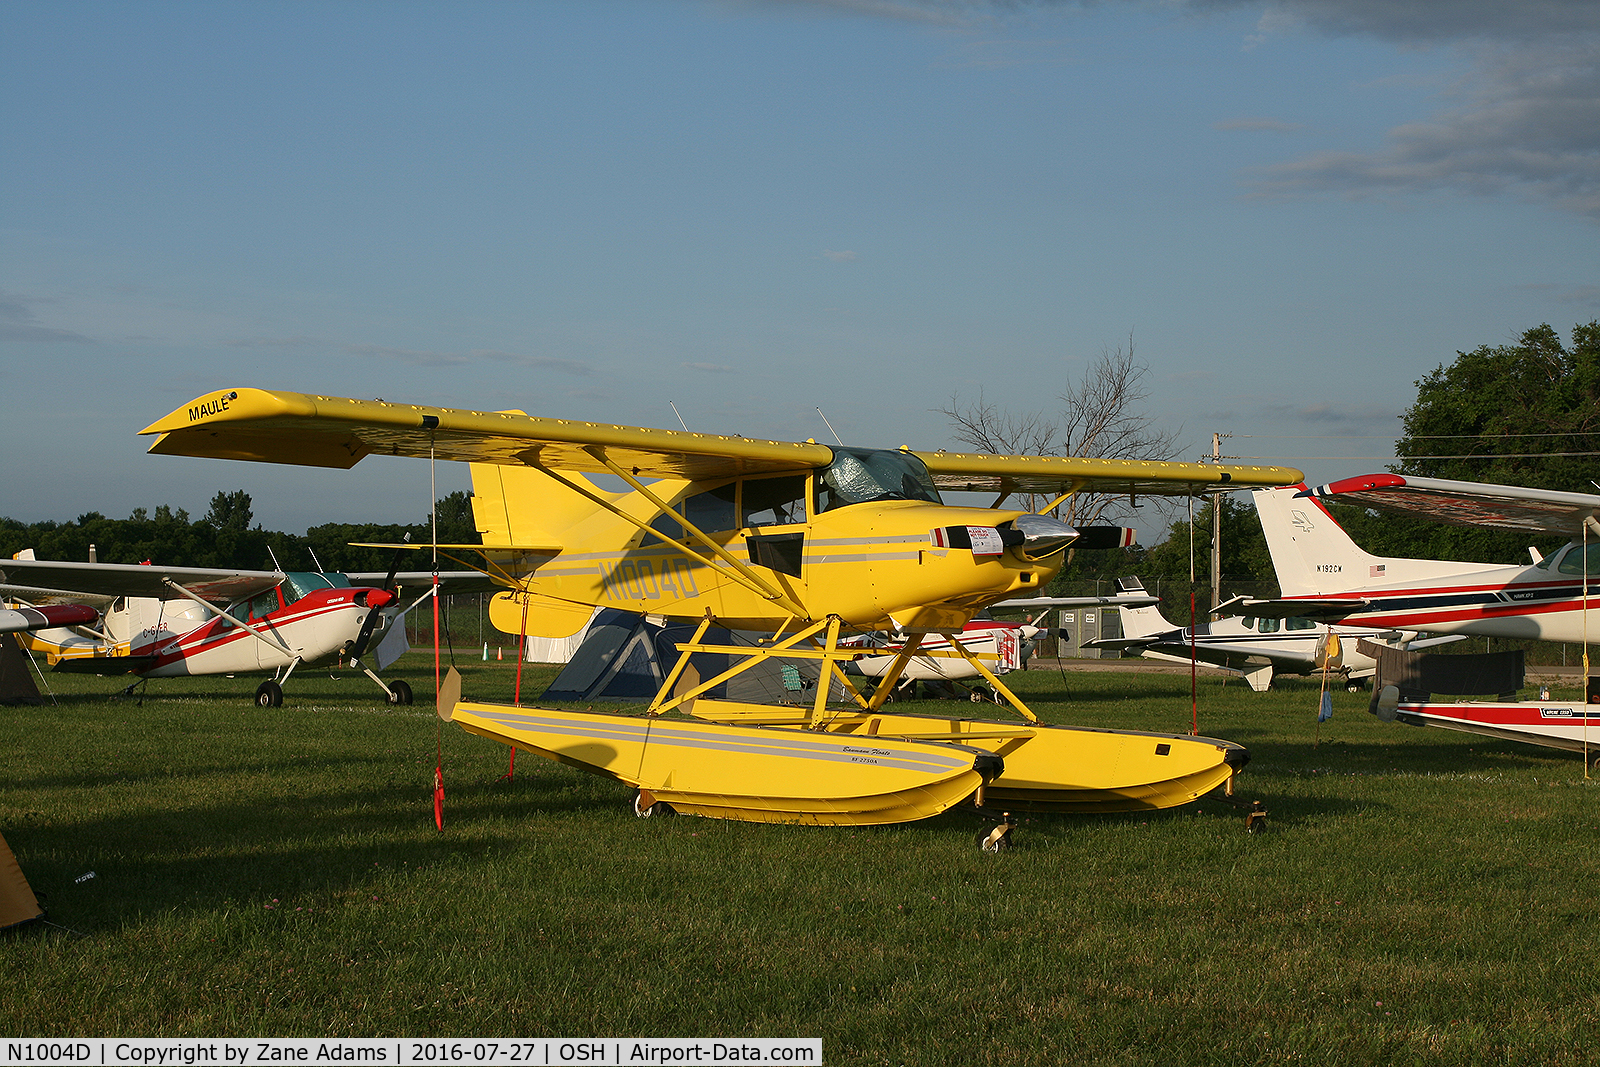 N1004D, 1995 Maule M-7-260 C/N 26001C, At the 2016 EAA AirVenture - Oshkosh, Wisconsin